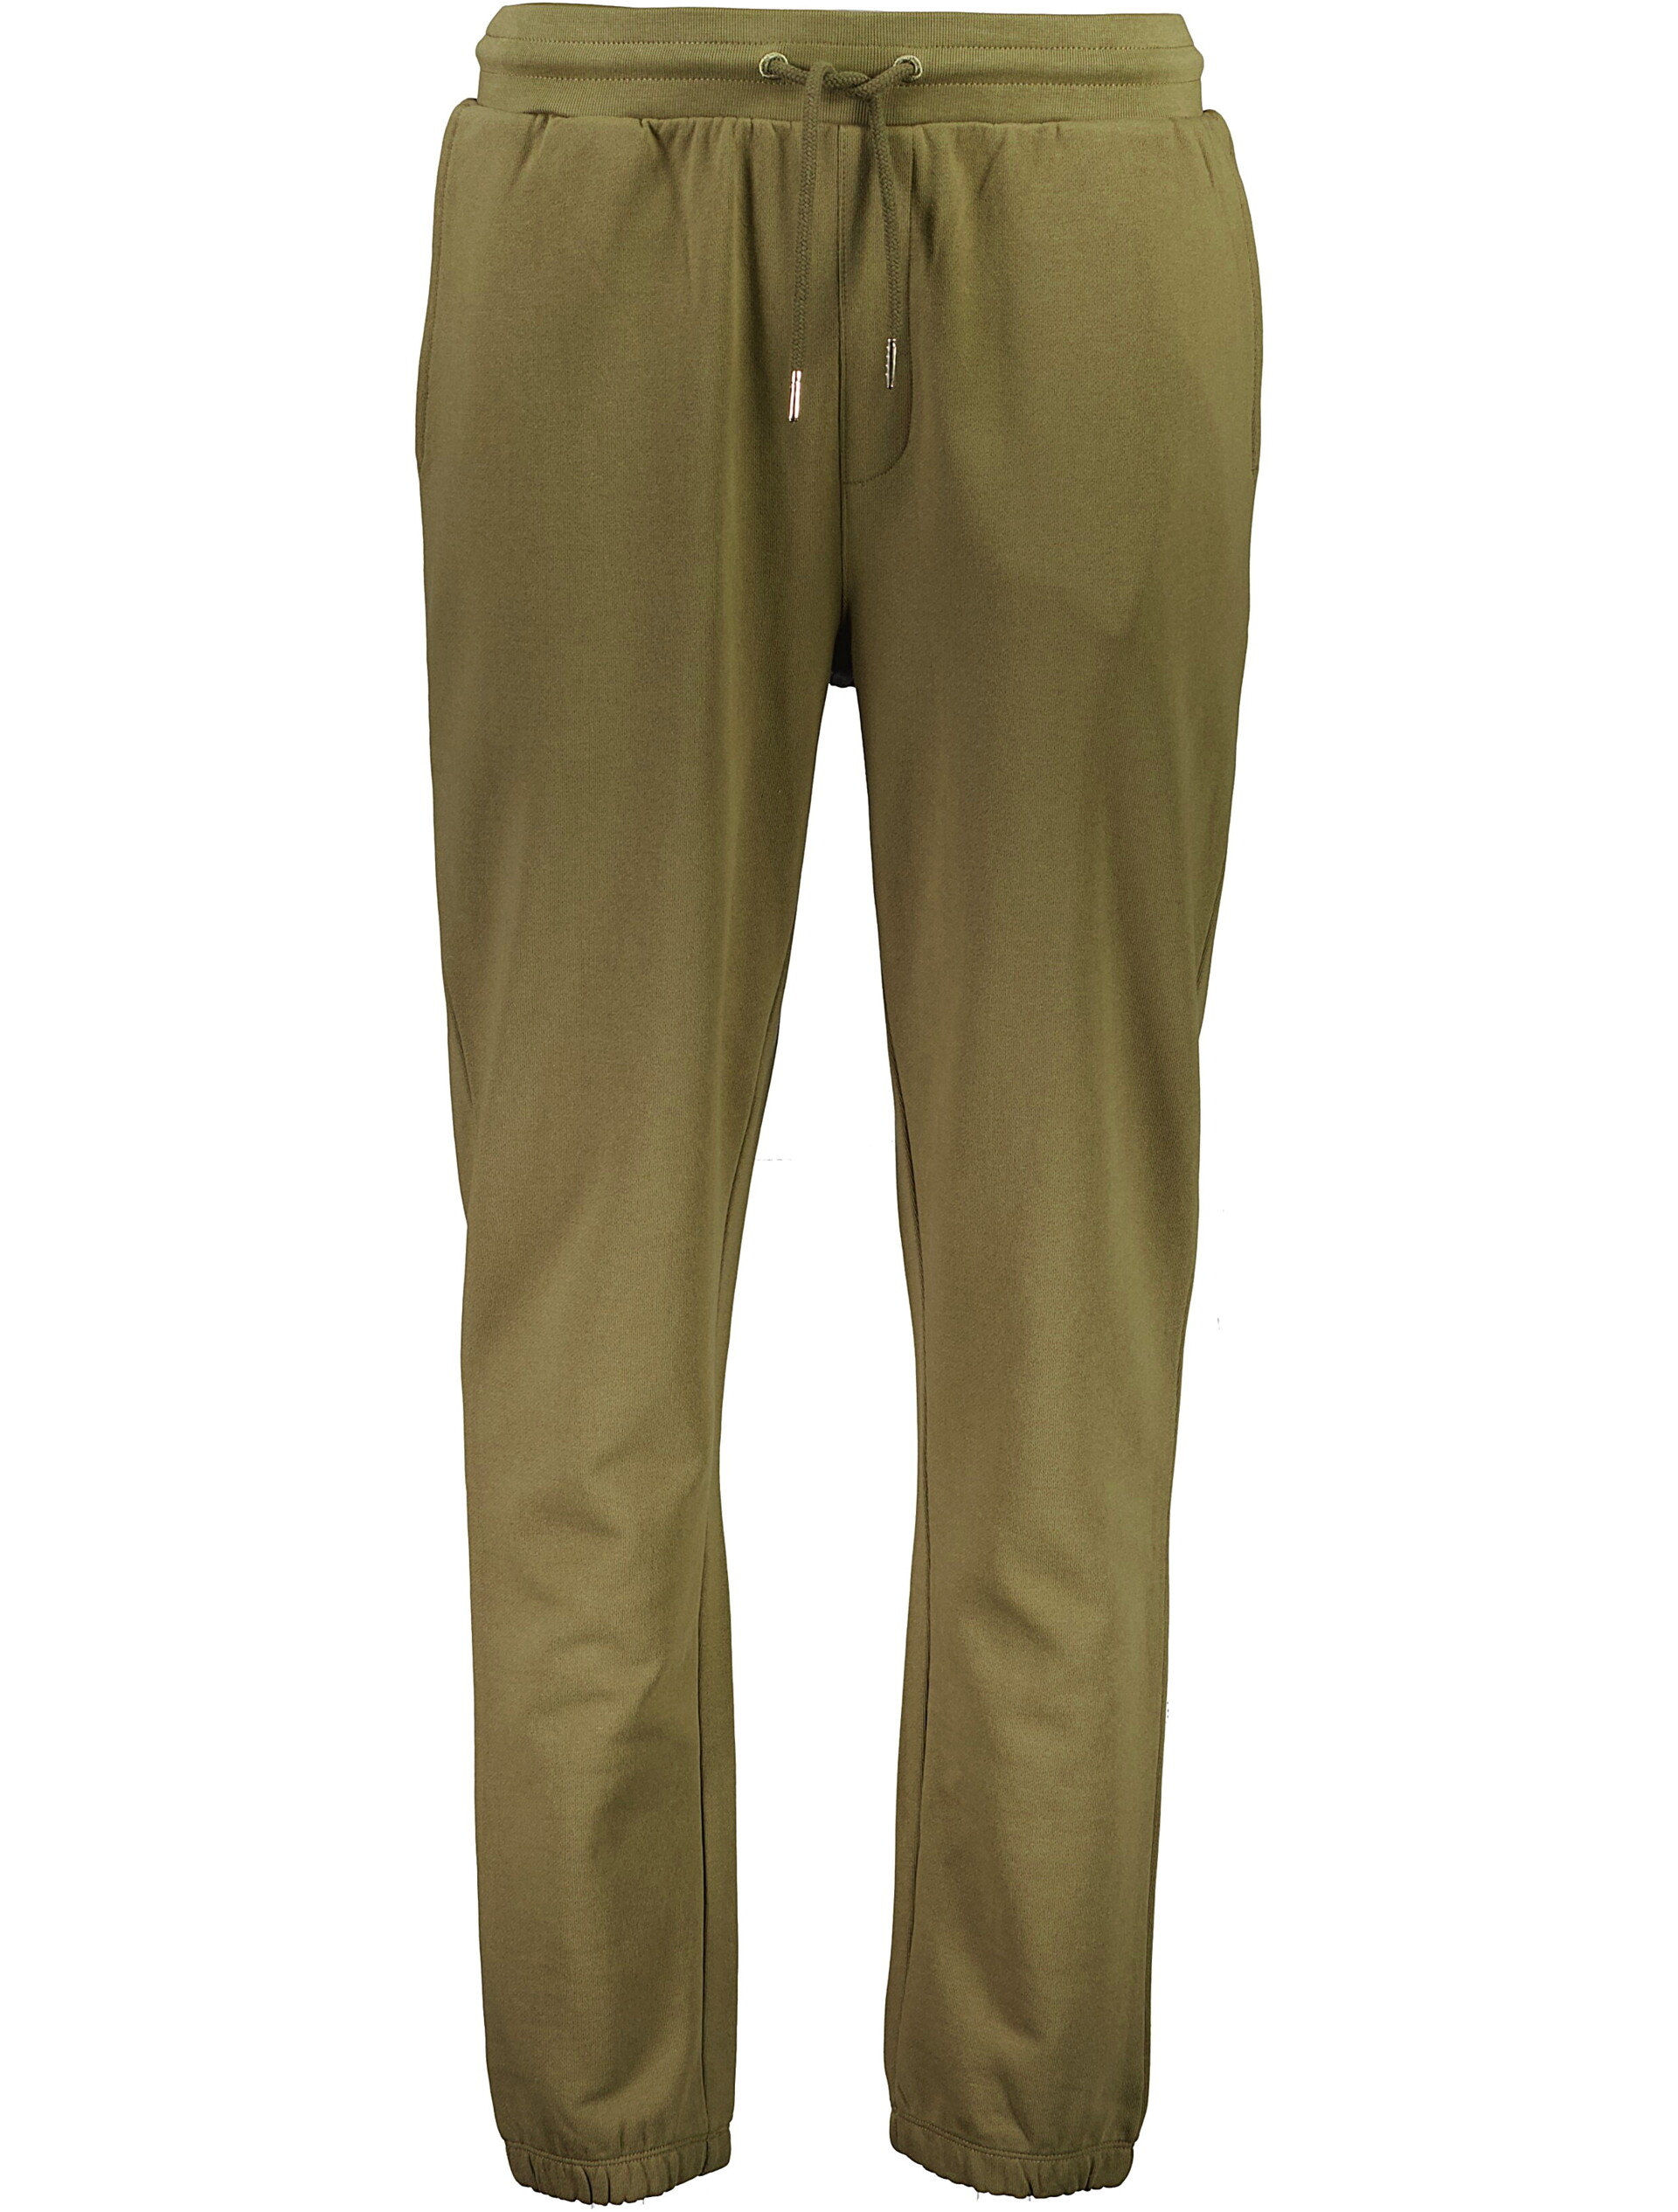 Lindbergh Sweatpants green / army